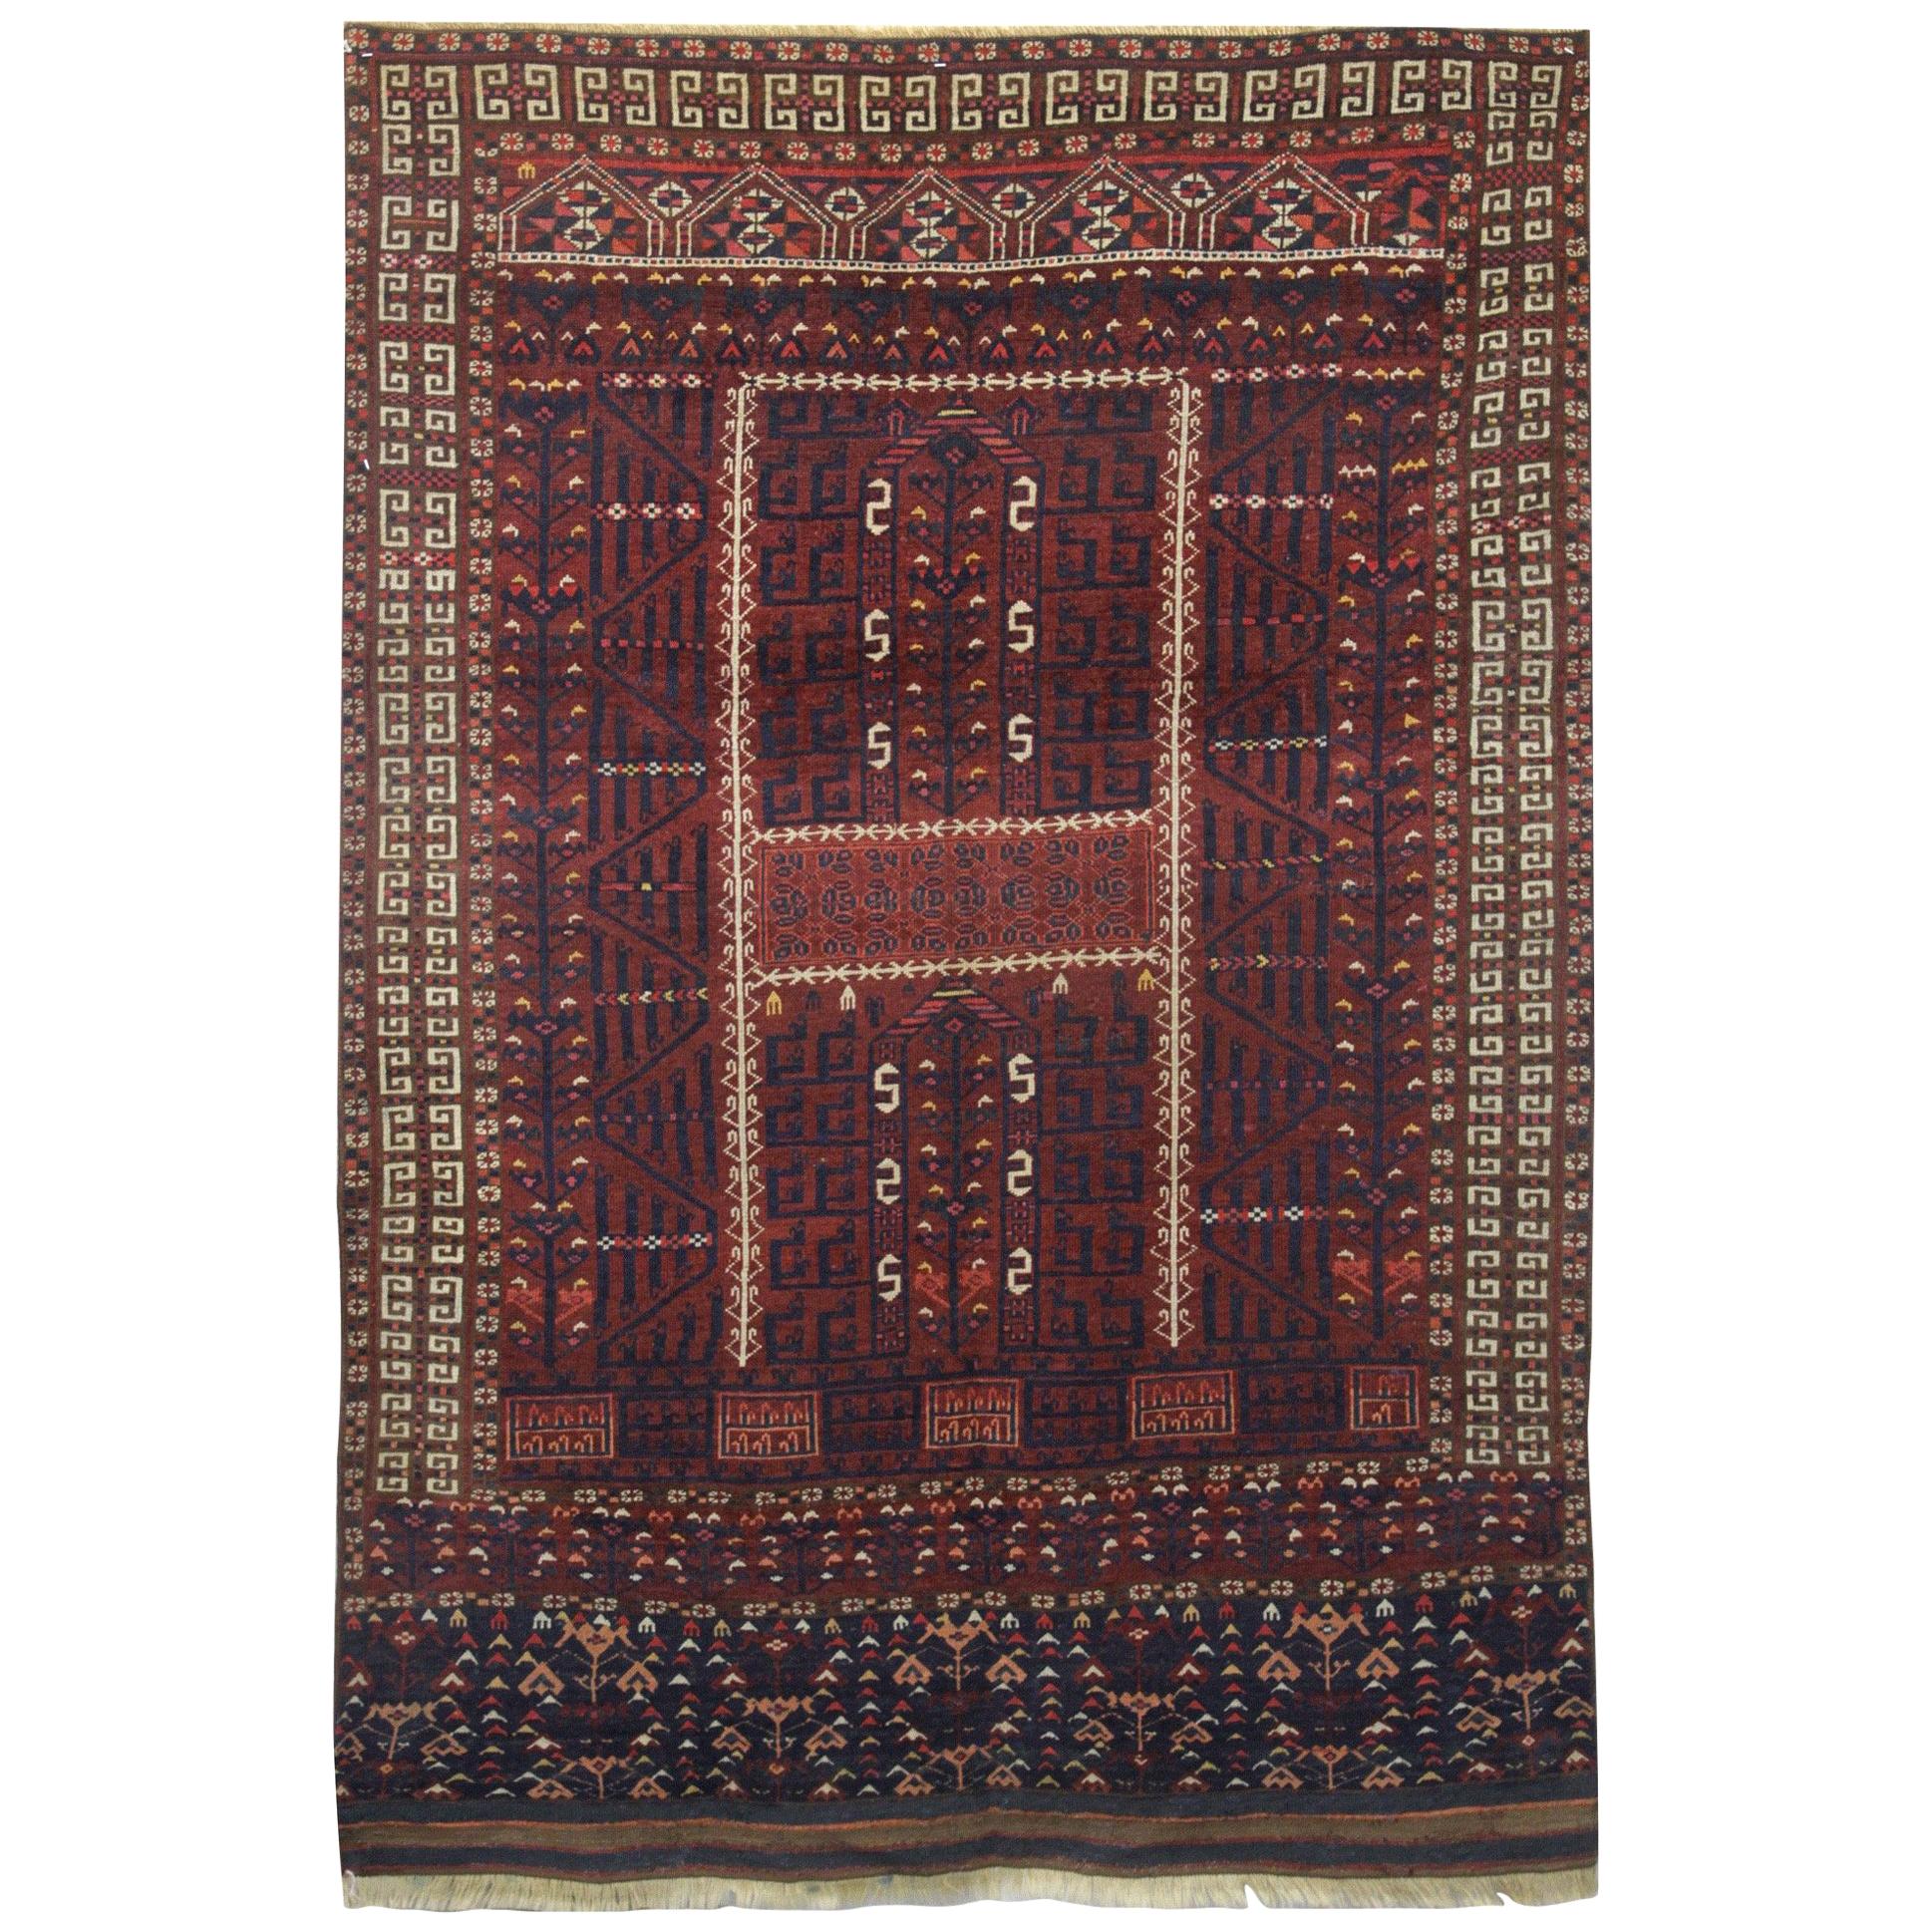 Cherry Handmade Carpet, Antique Rug Turkmen Hatchli, Wool Oriental Rugs for Sale